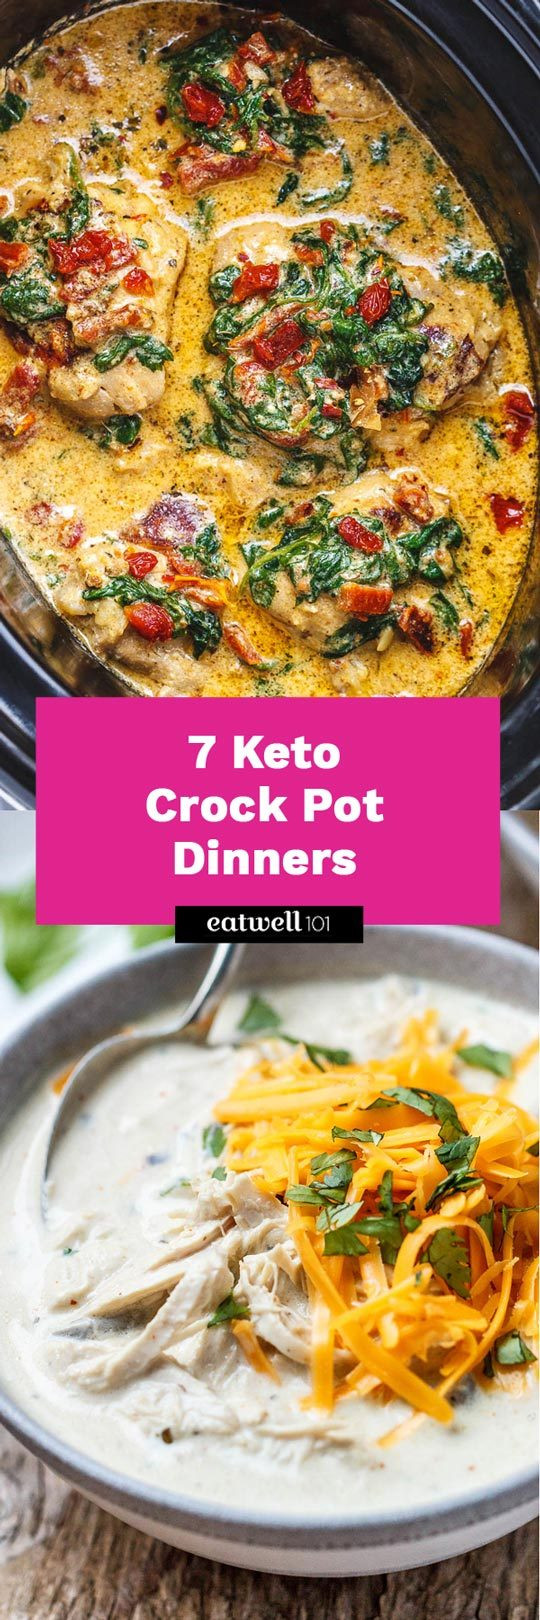 Keto Dinner Recipes Crock Pot Low Carb
 7 Keto Crock Pot Recipes for Easy Low Carb Dinners